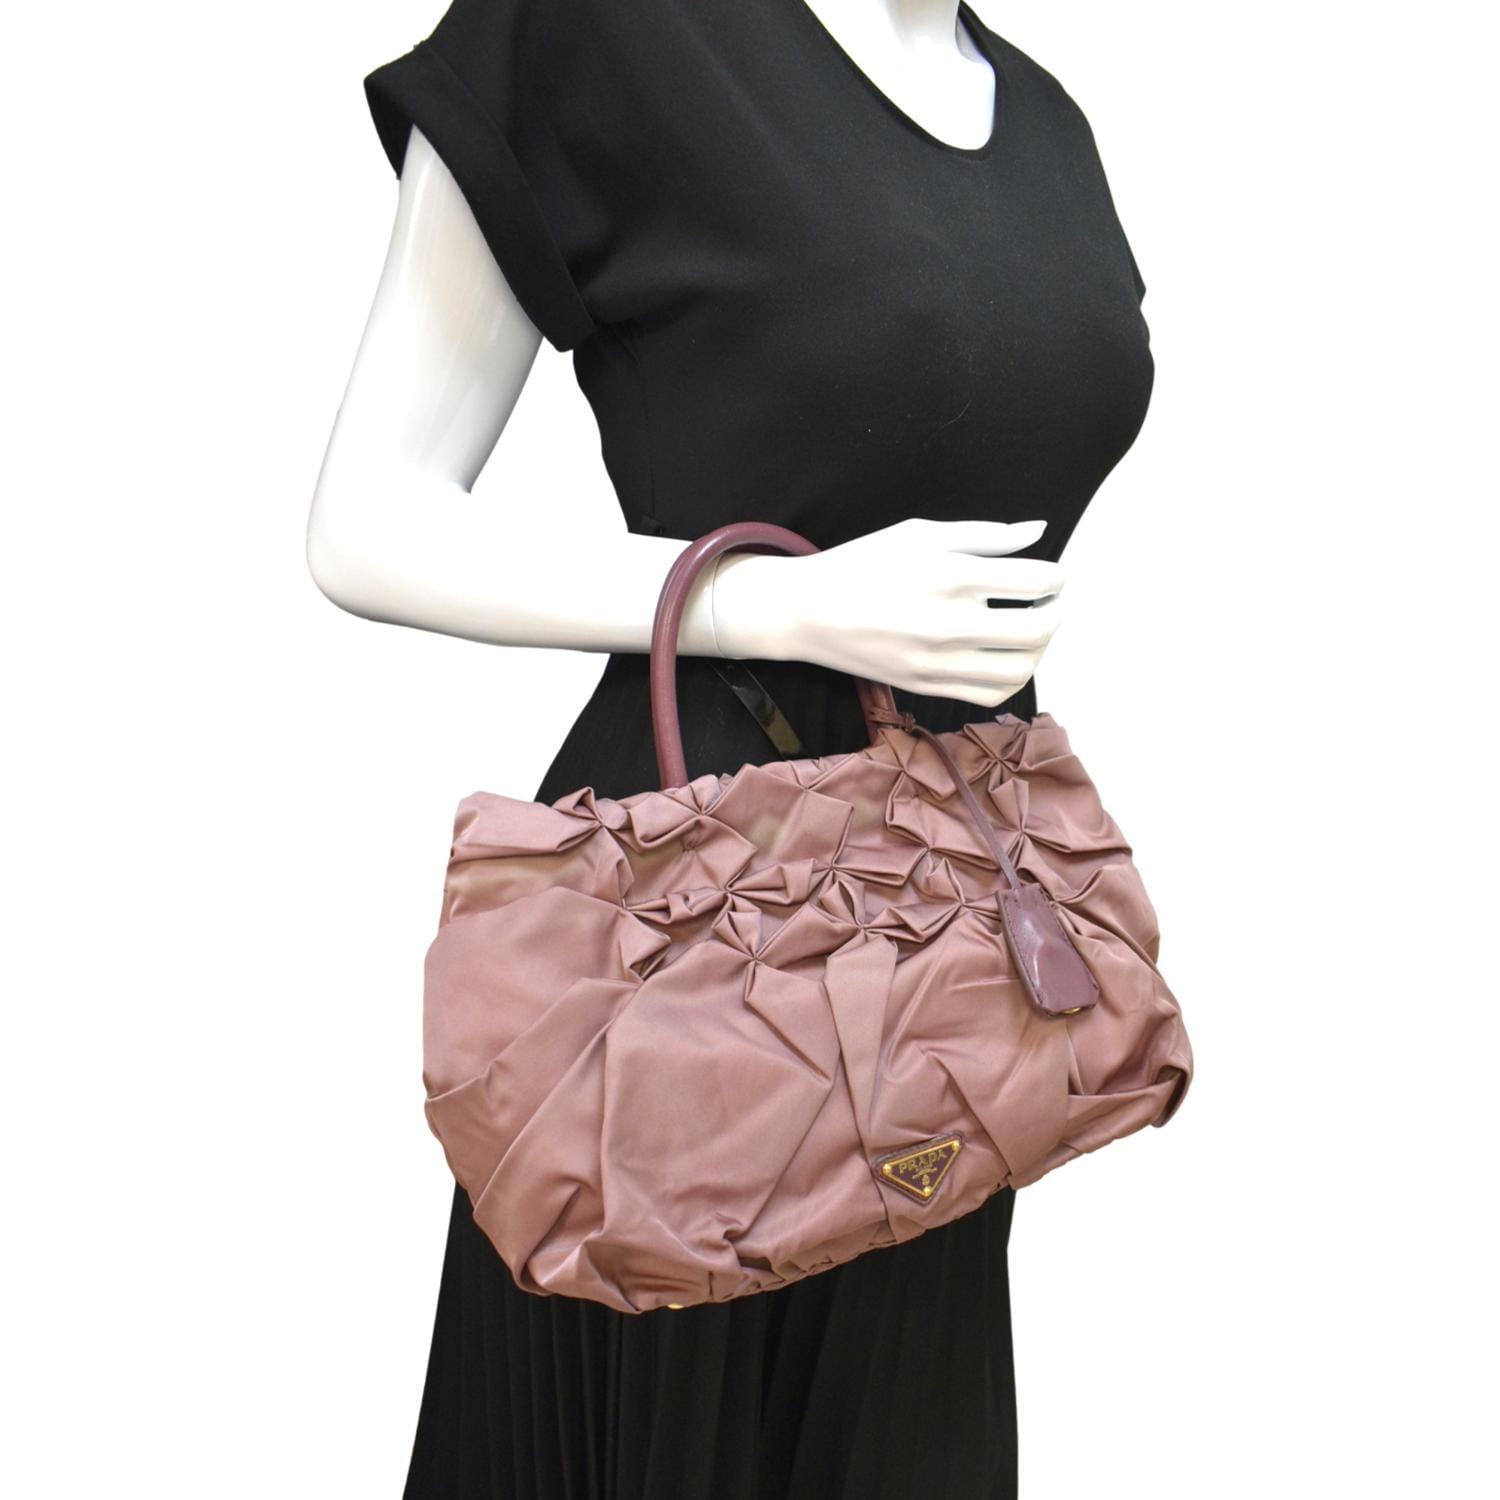 Vintage Prada Tessuto nylon Shoulder bag